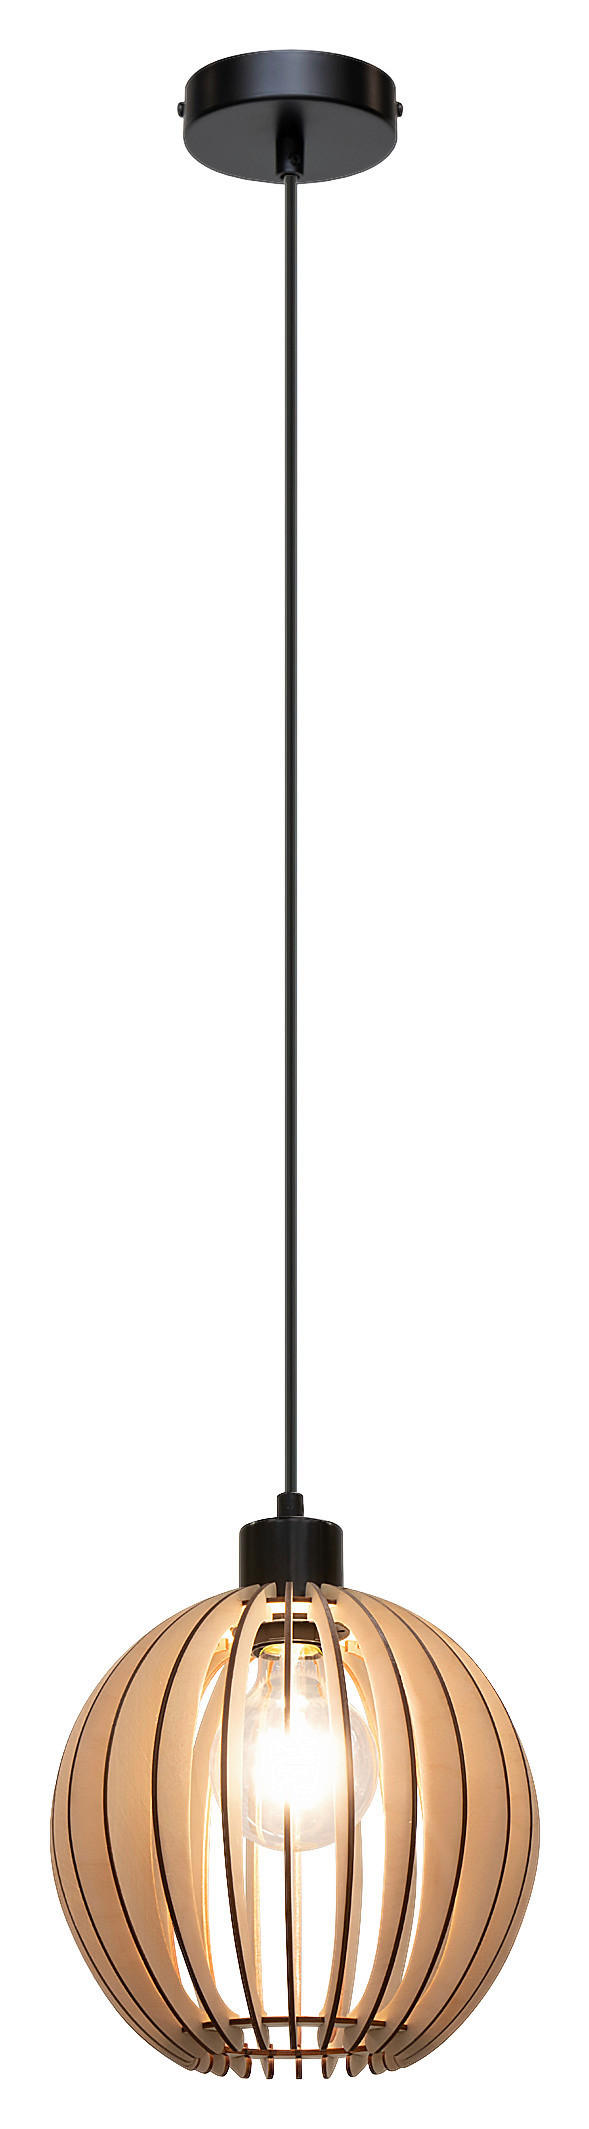 SPOT Light Pendelleuchte Shiro natur schwarz Holz Metall L/D: ca. 120x20 cm  E27 1 Brennstellen ▷ online bei POCO kaufen